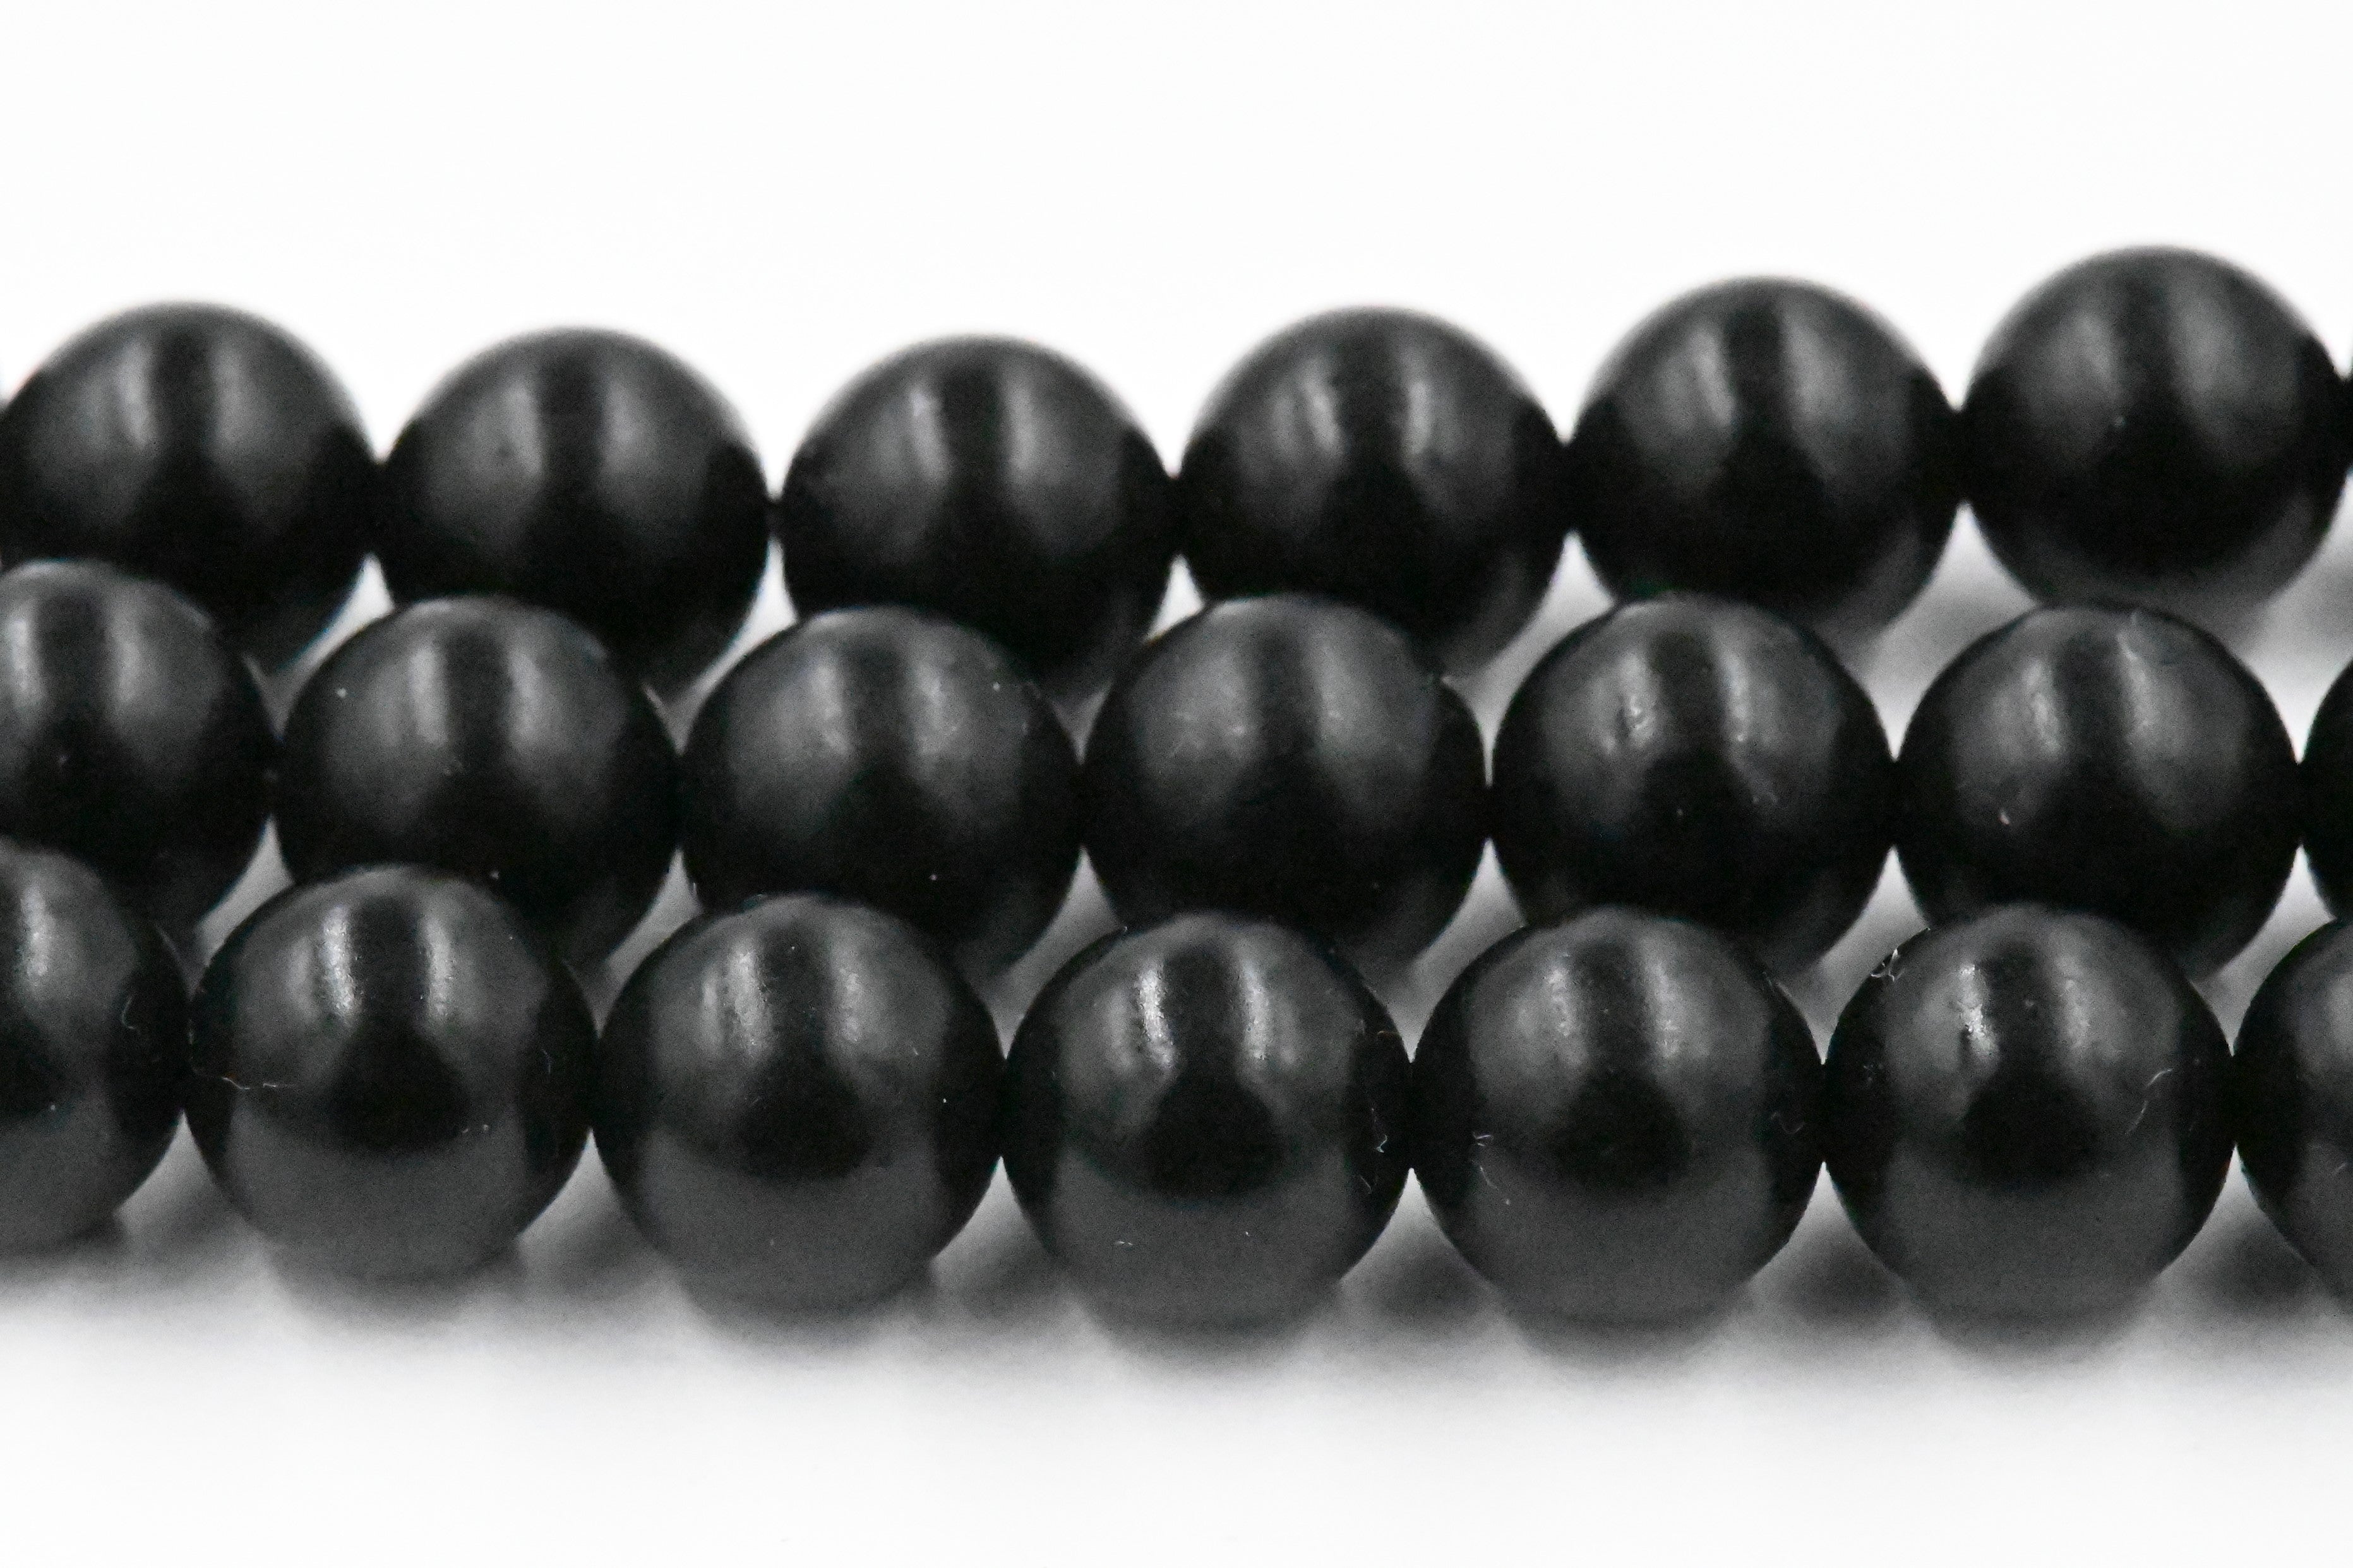 8mm Black Onyx Semi matte, 15.25 inch strand